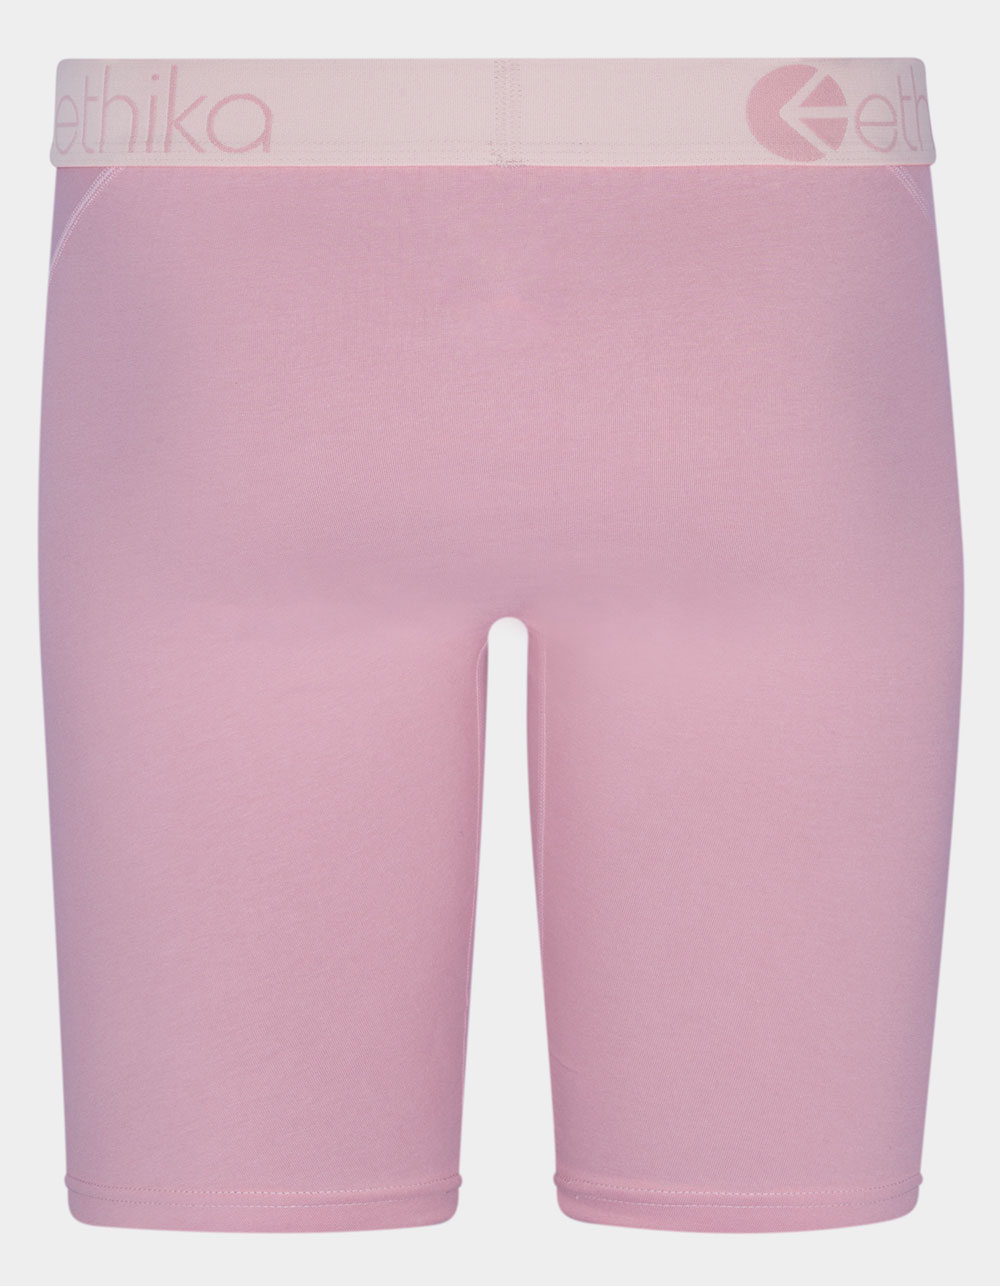 Girls Ethika Ethika Graphic Underwear - Girls' Grade School Green/Pink Size  L - Yahoo Shopping